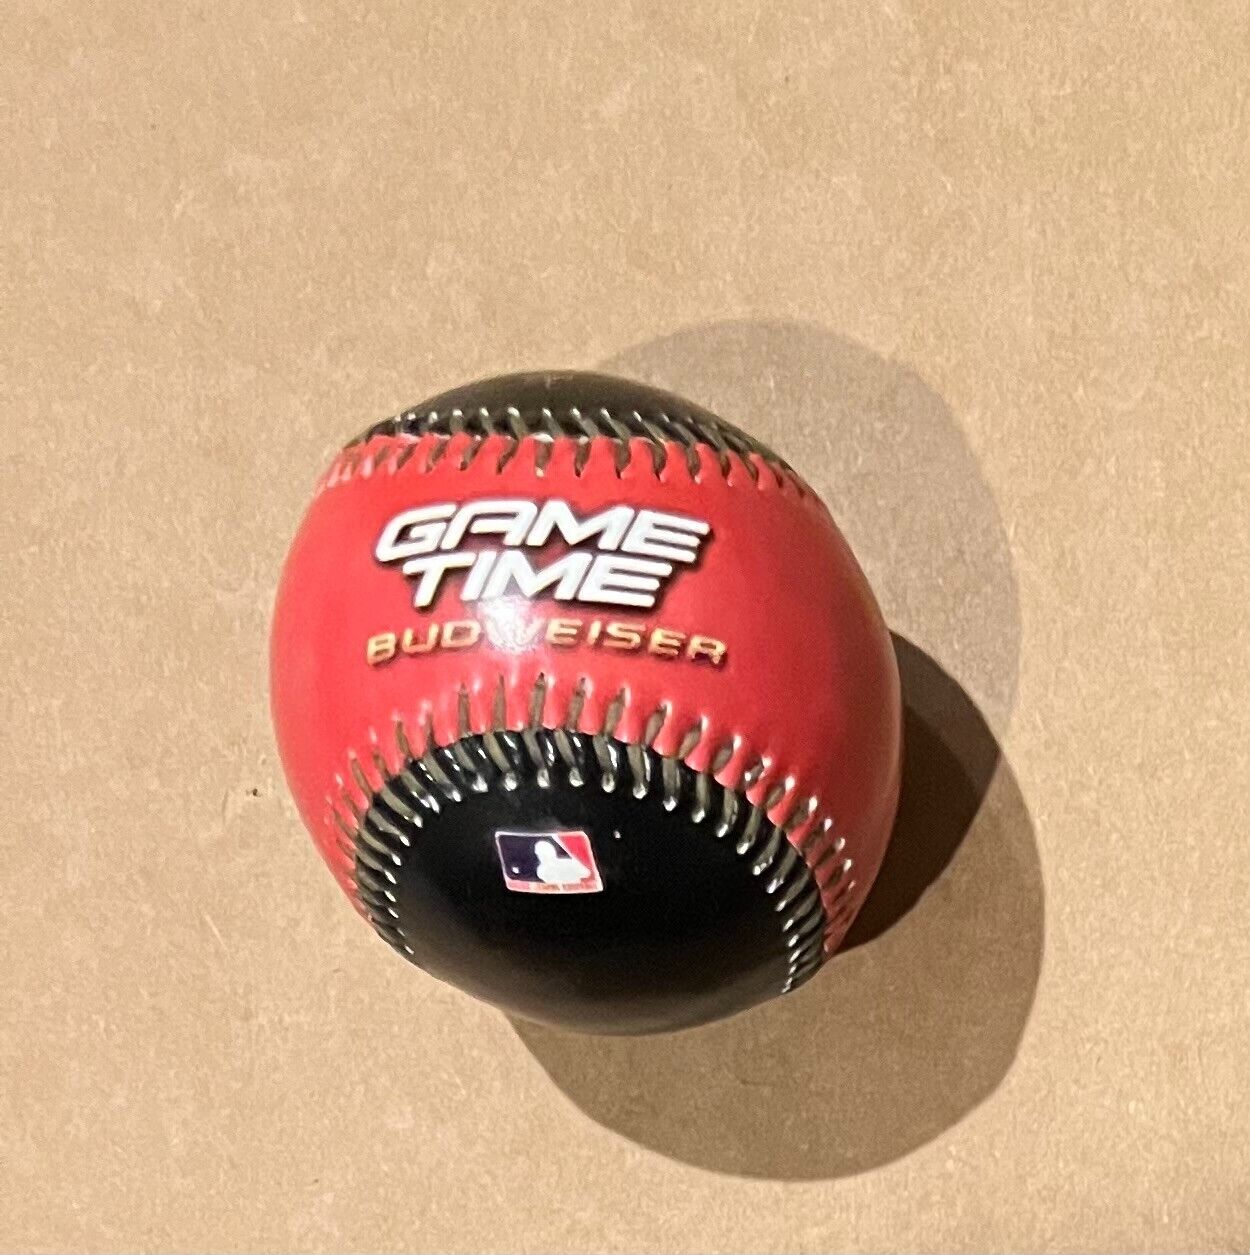 Budweiser GAME TIME Baseball - RARE Promotional item - 2004